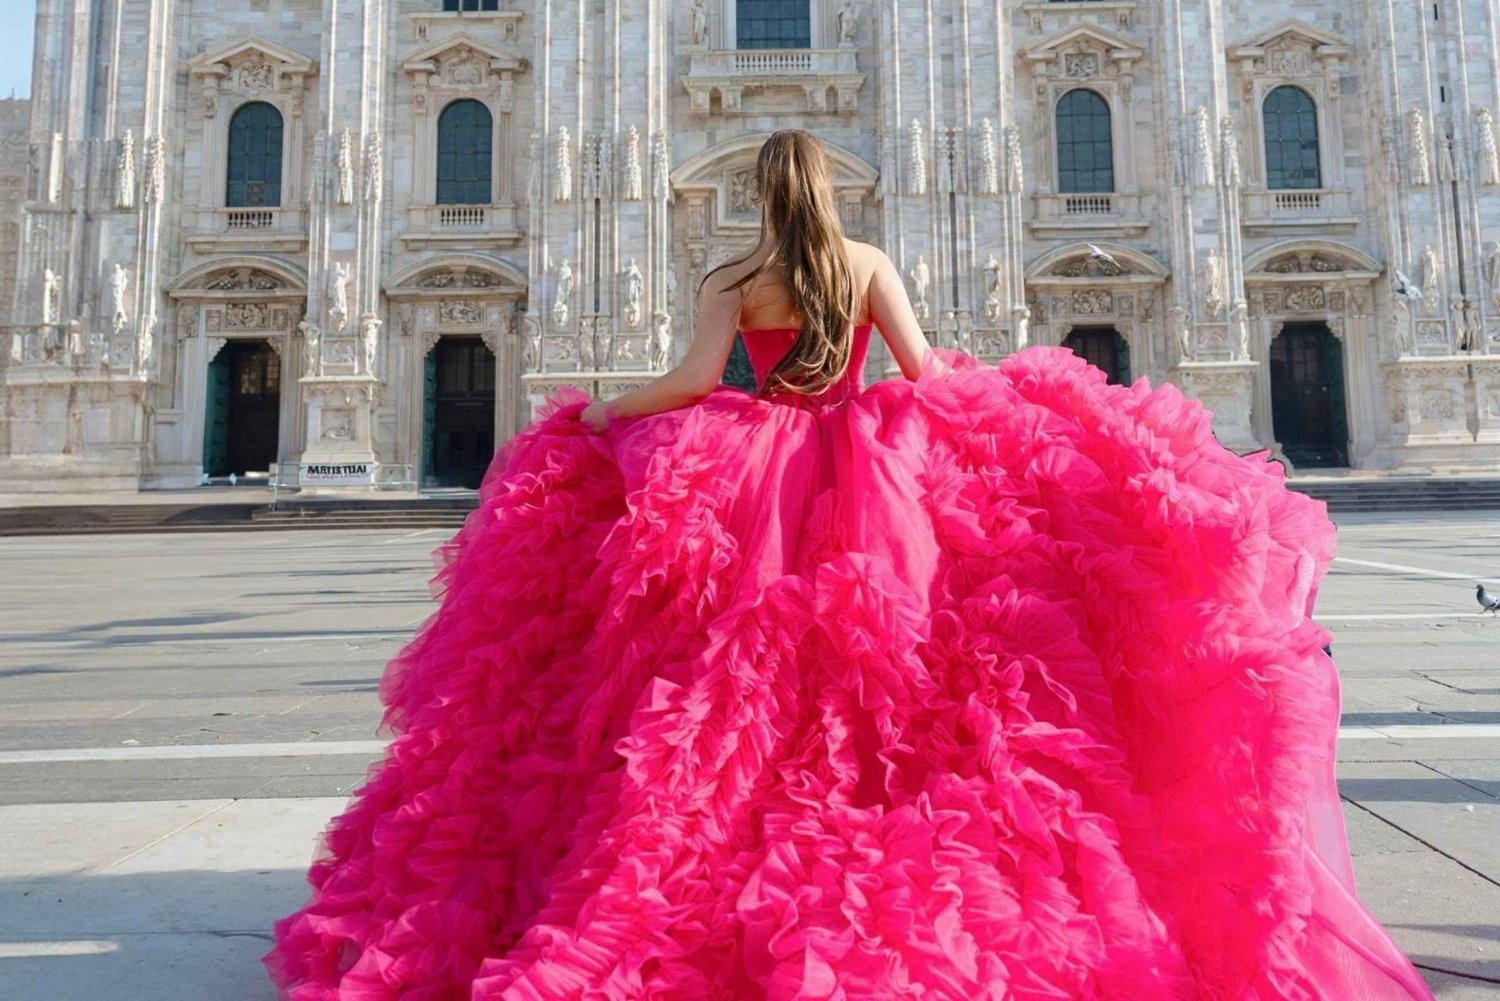 Sesja zdjęciowa z bajkową sukienką w sercu Mediolanu